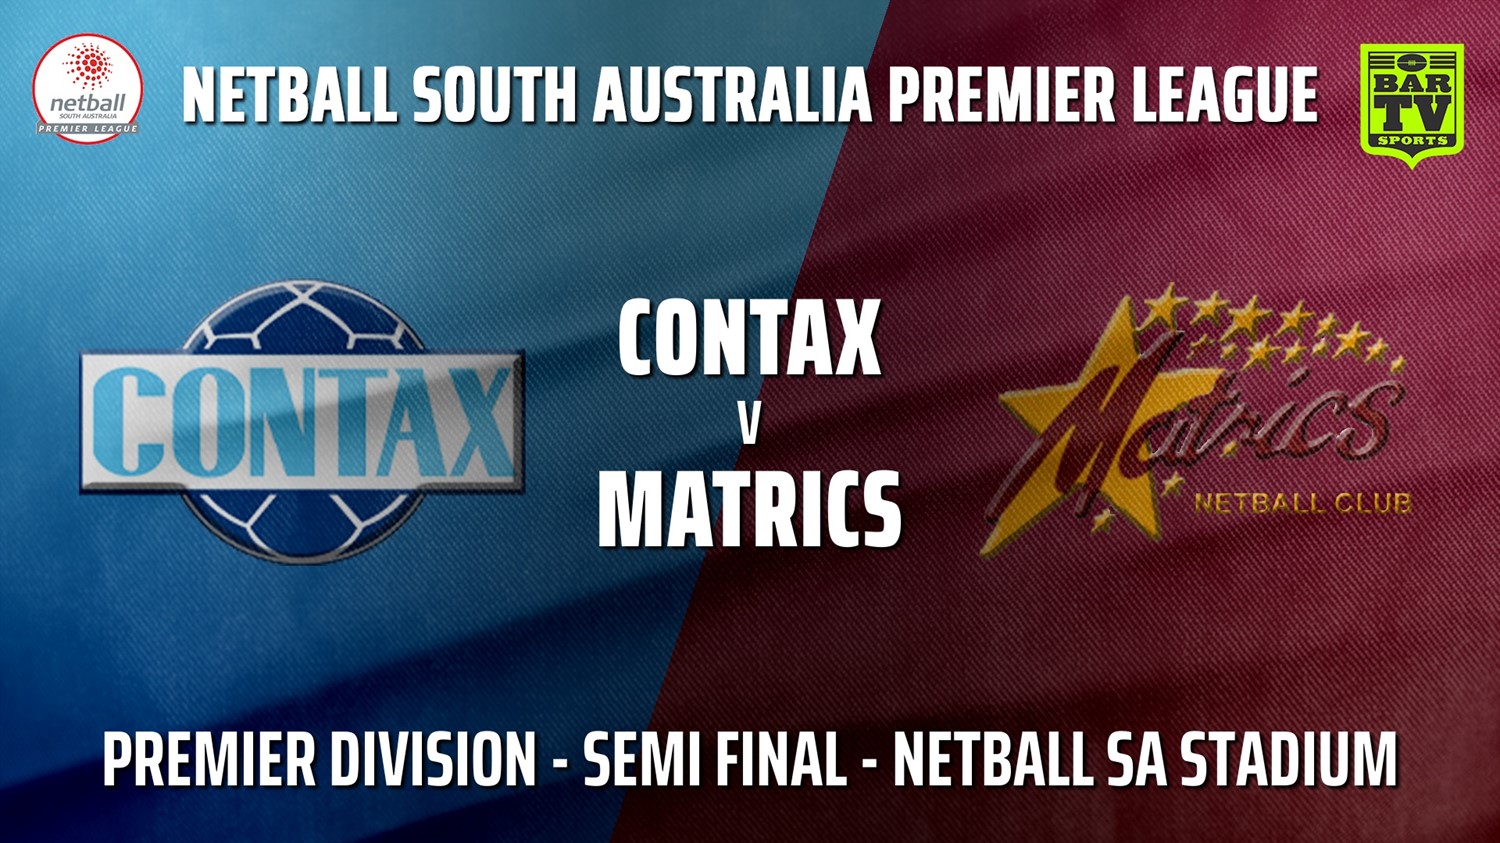 210820-SA Premier League Semi Final - Premier Division - Contax v Matrics Slate Image